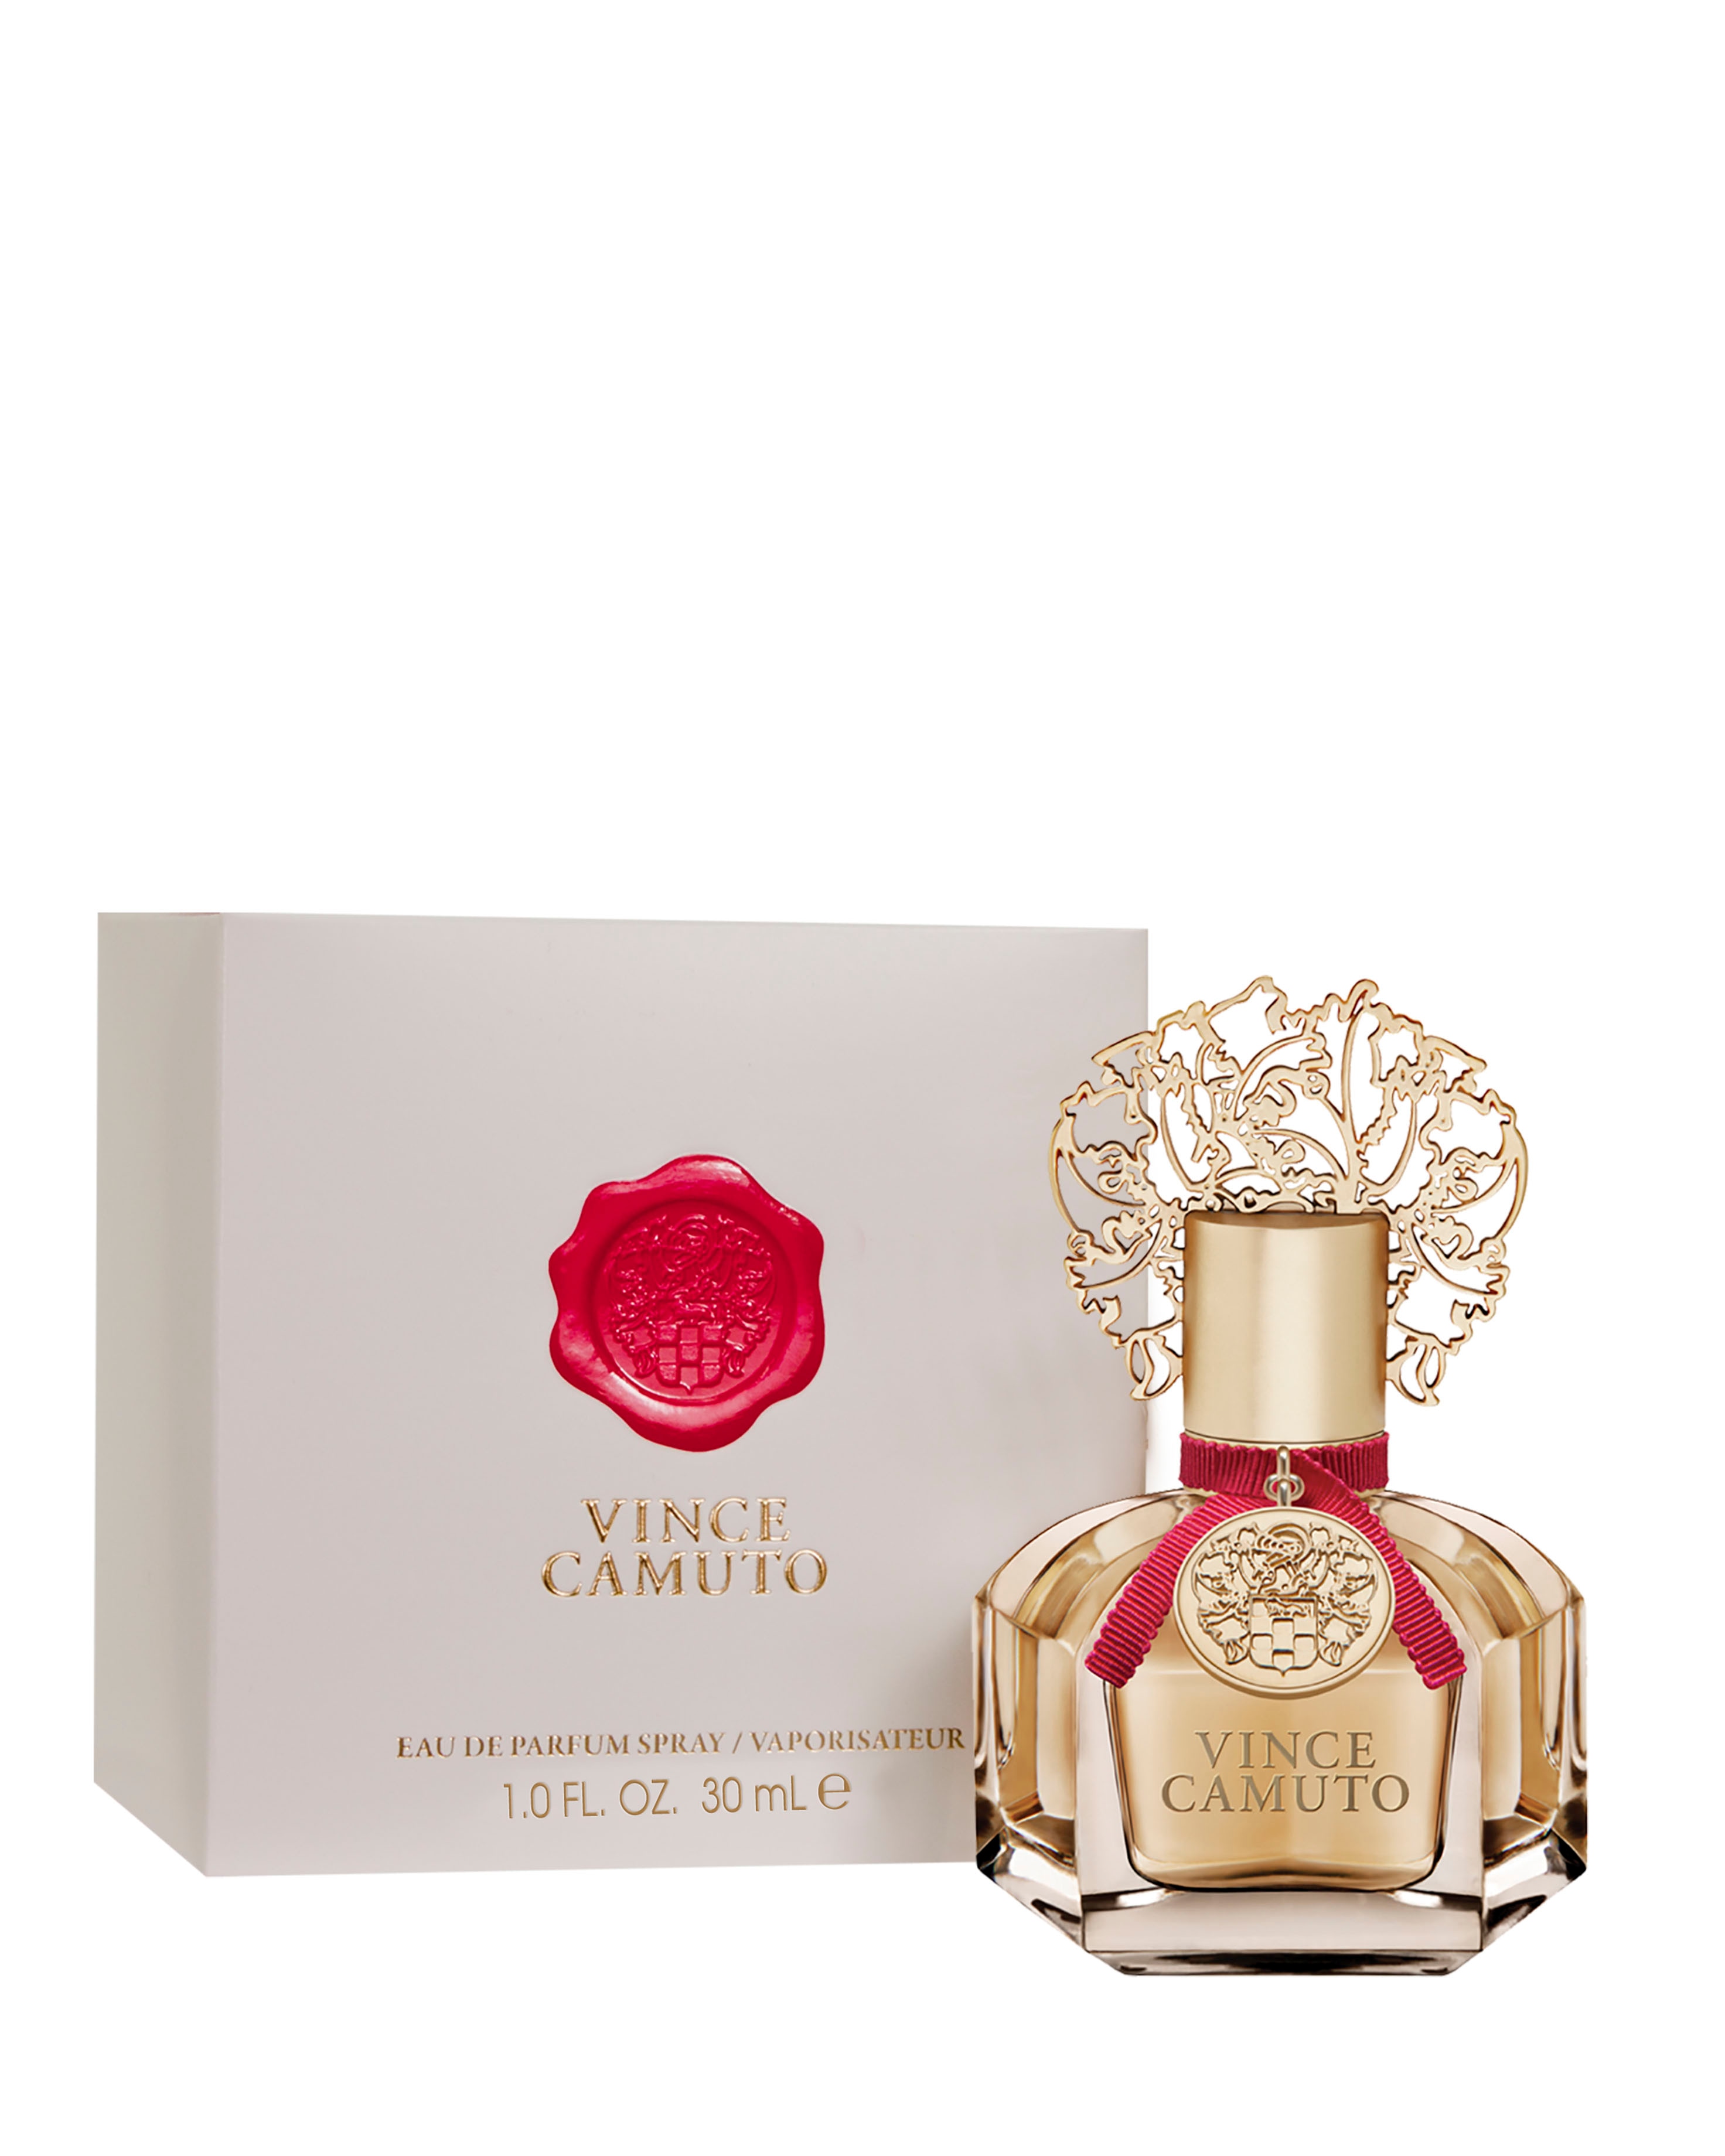 NEW Vince Camuto EDT Spray 100ml Perfume